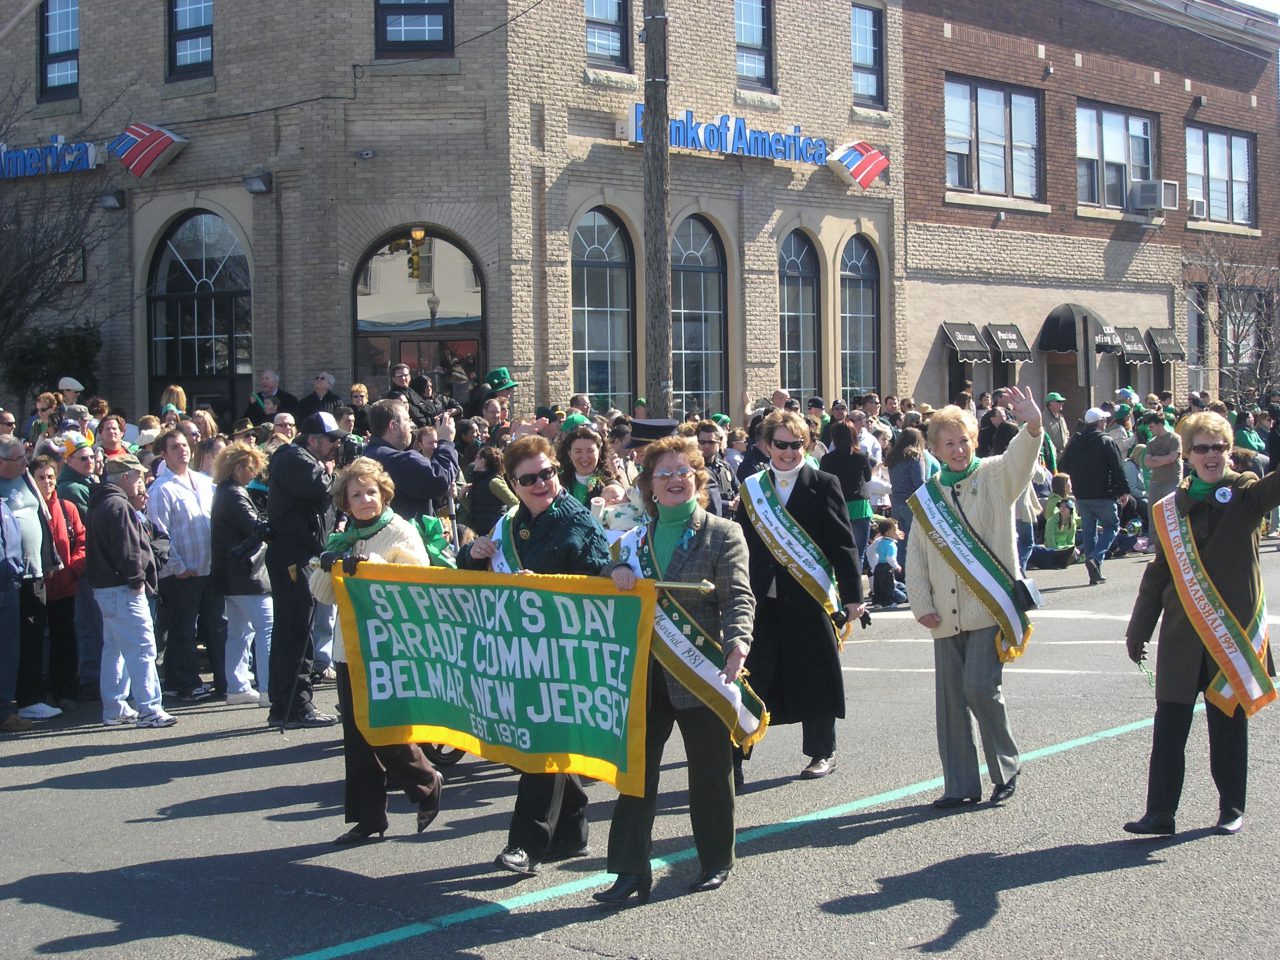 About Belmar Lake Como St. Patrick's Day Parade